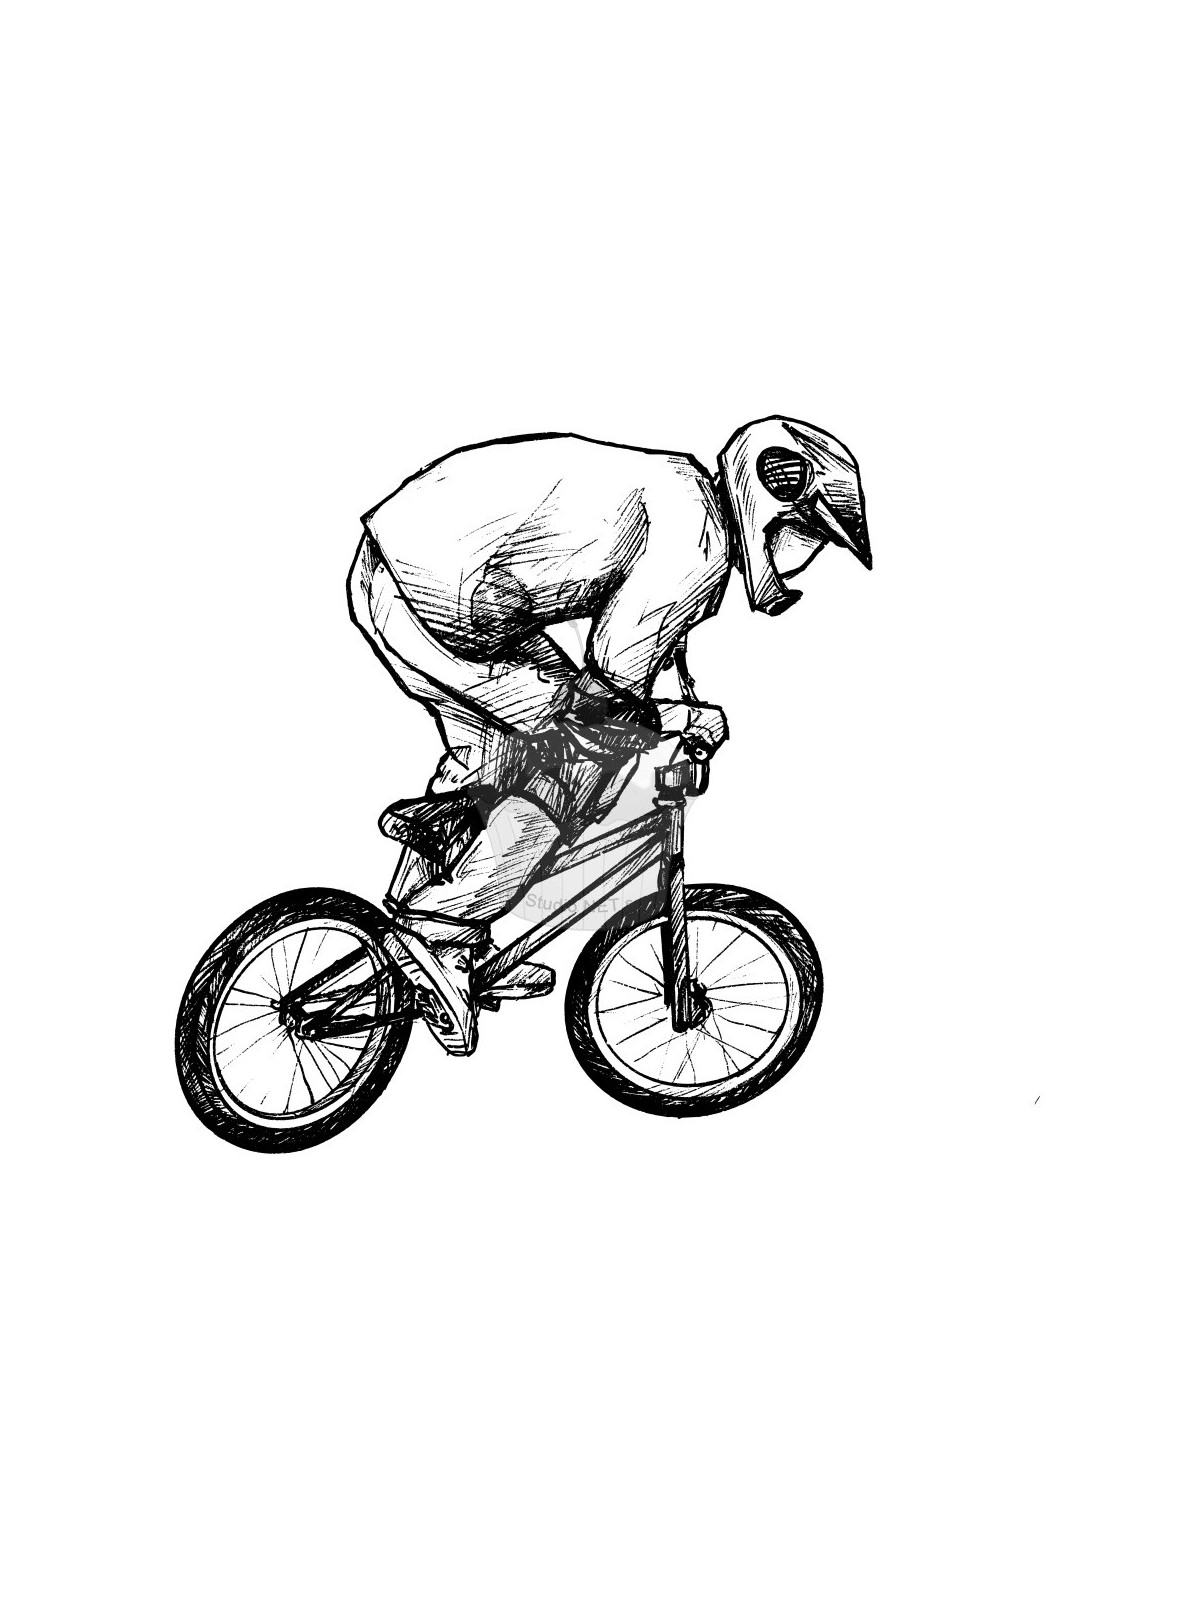 Edible paper "Cyclist 10" - A4